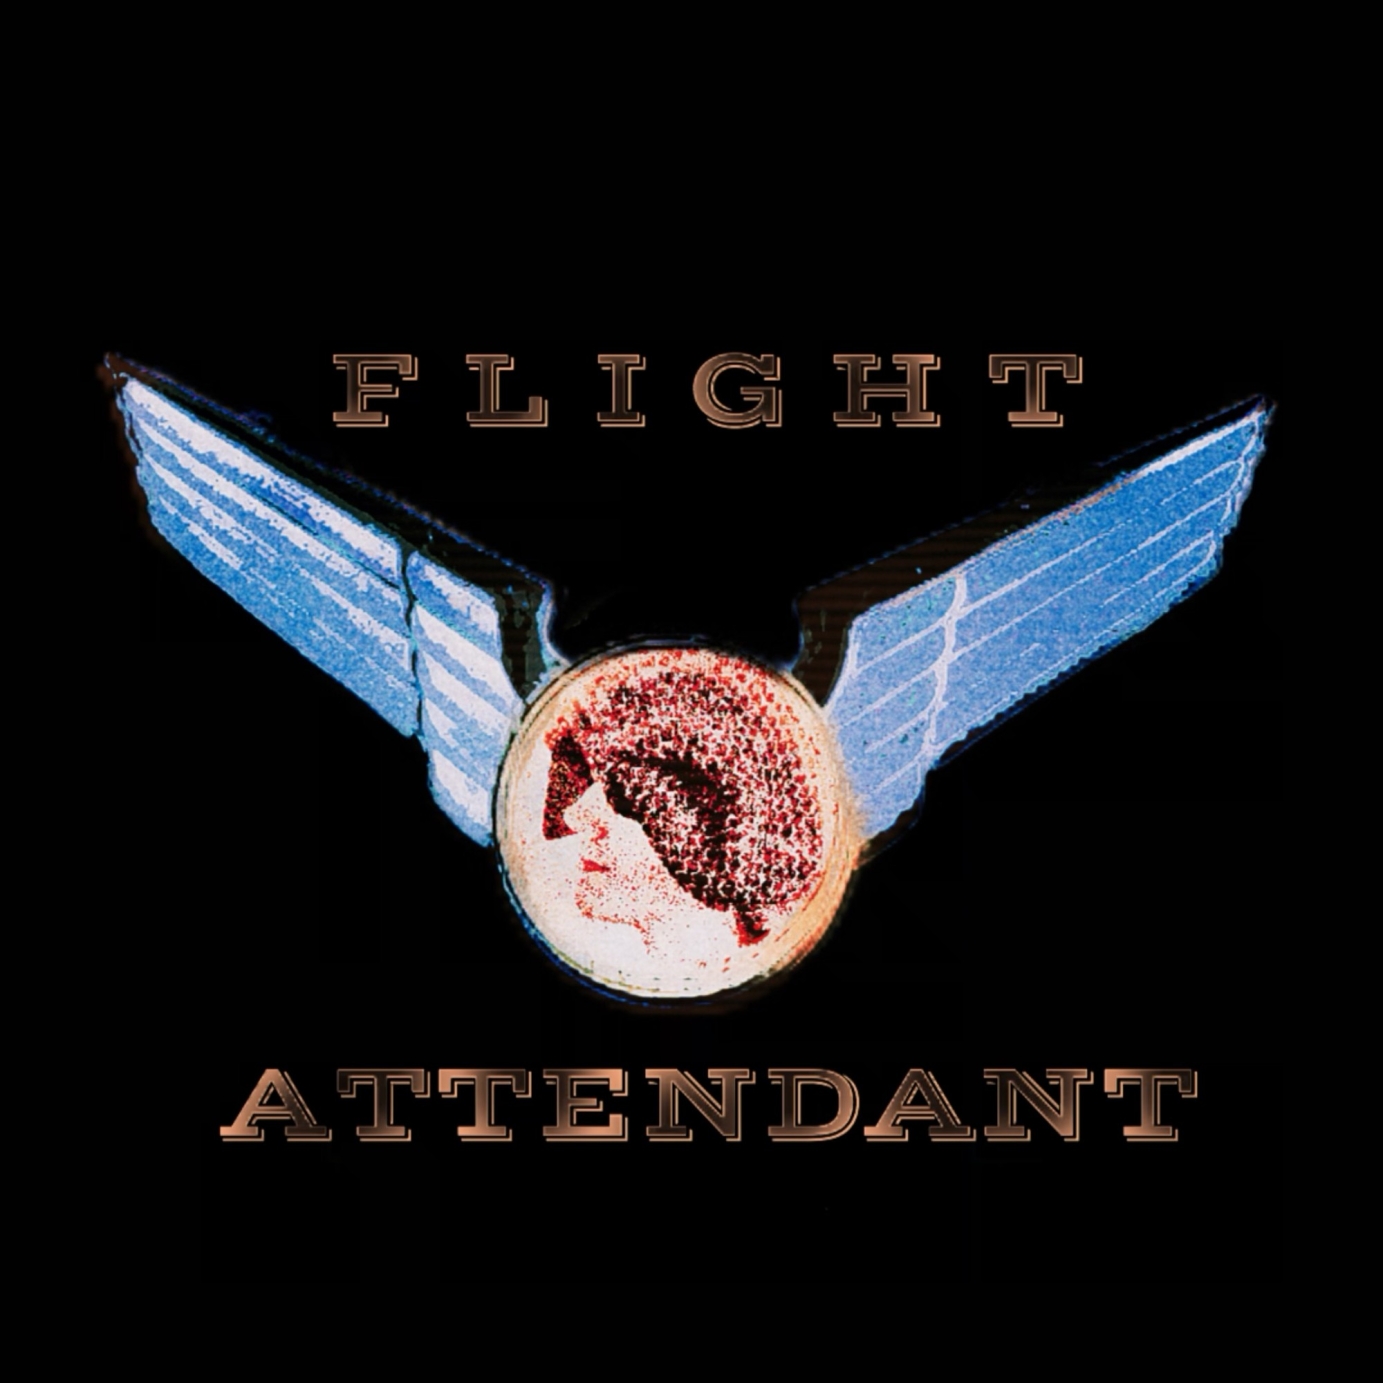 Flight Attendant (Band) designs